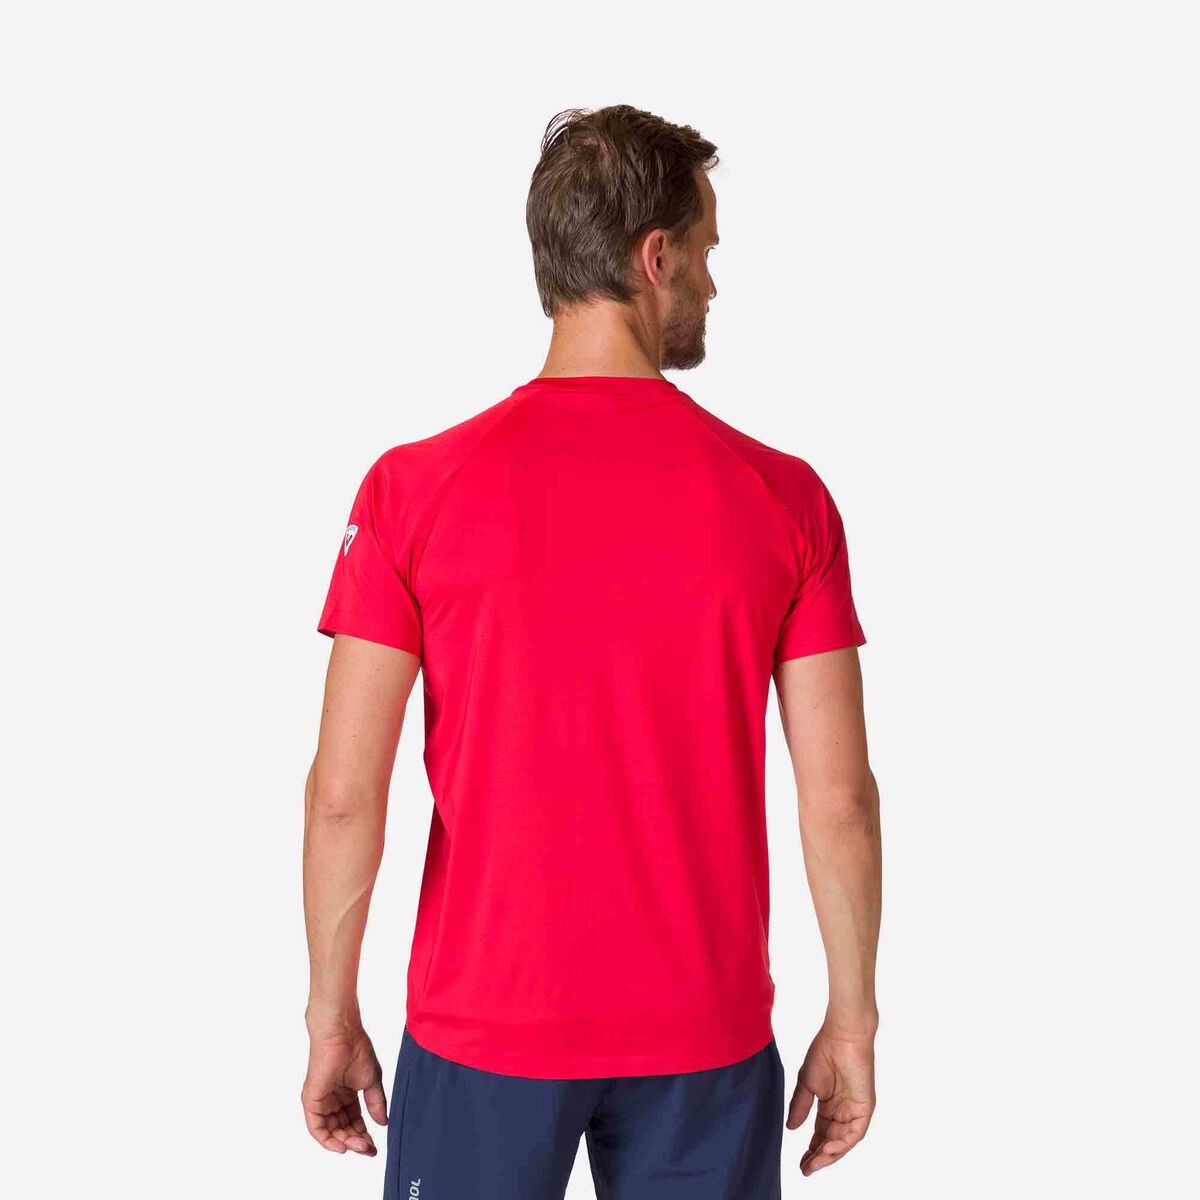 Camiseta transpirable ligera para hombre